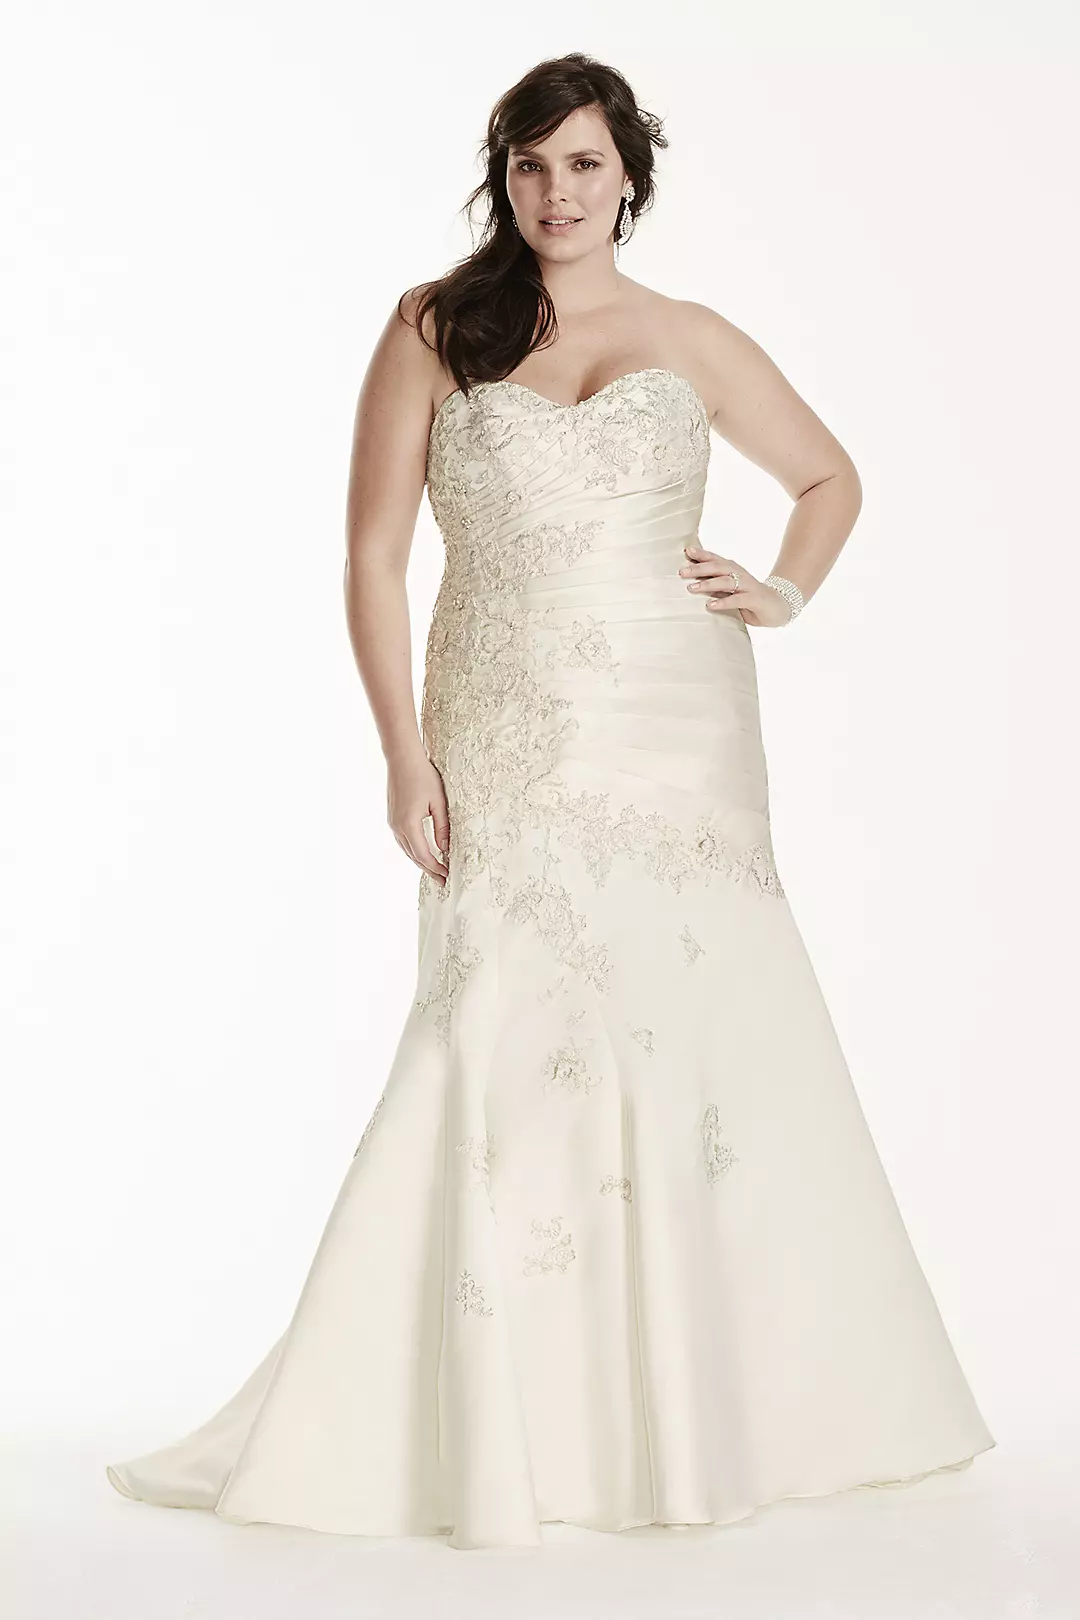 Satin Plus Size Wedding Dress with Lace Applique Image